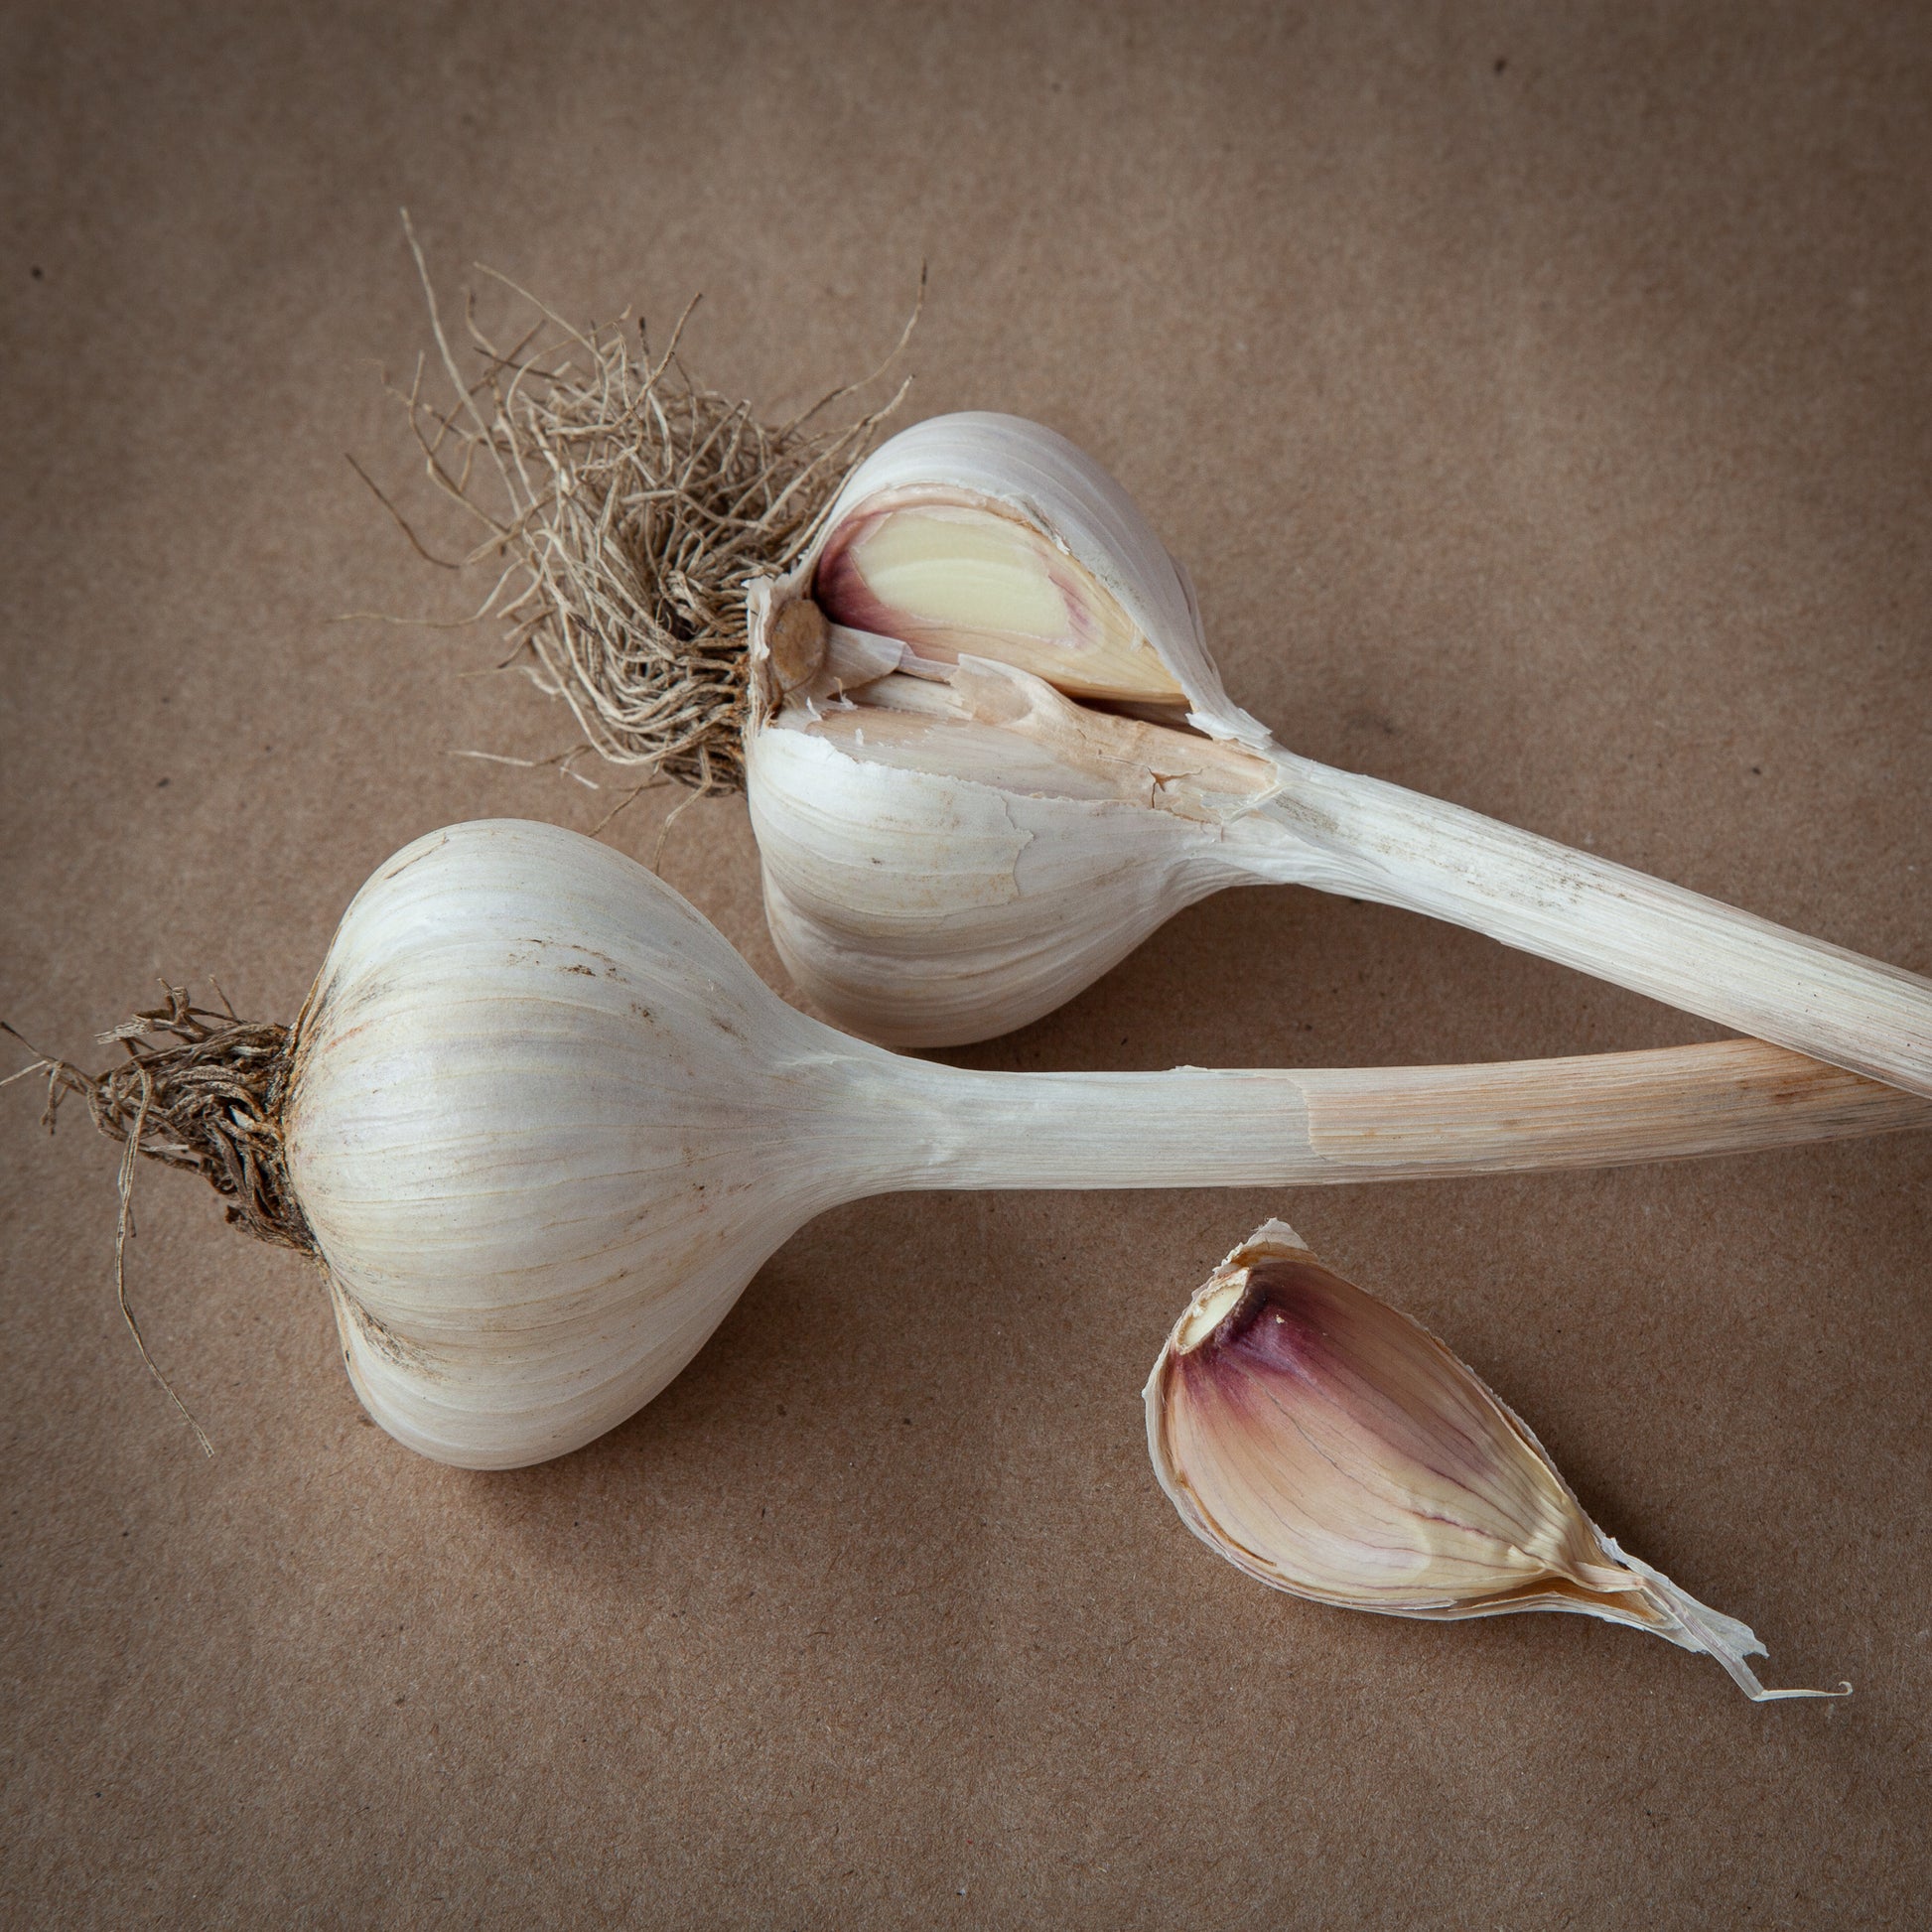 Leningrad garlic, porcelain garlic with no strings grown in Ontario by Garlicloves